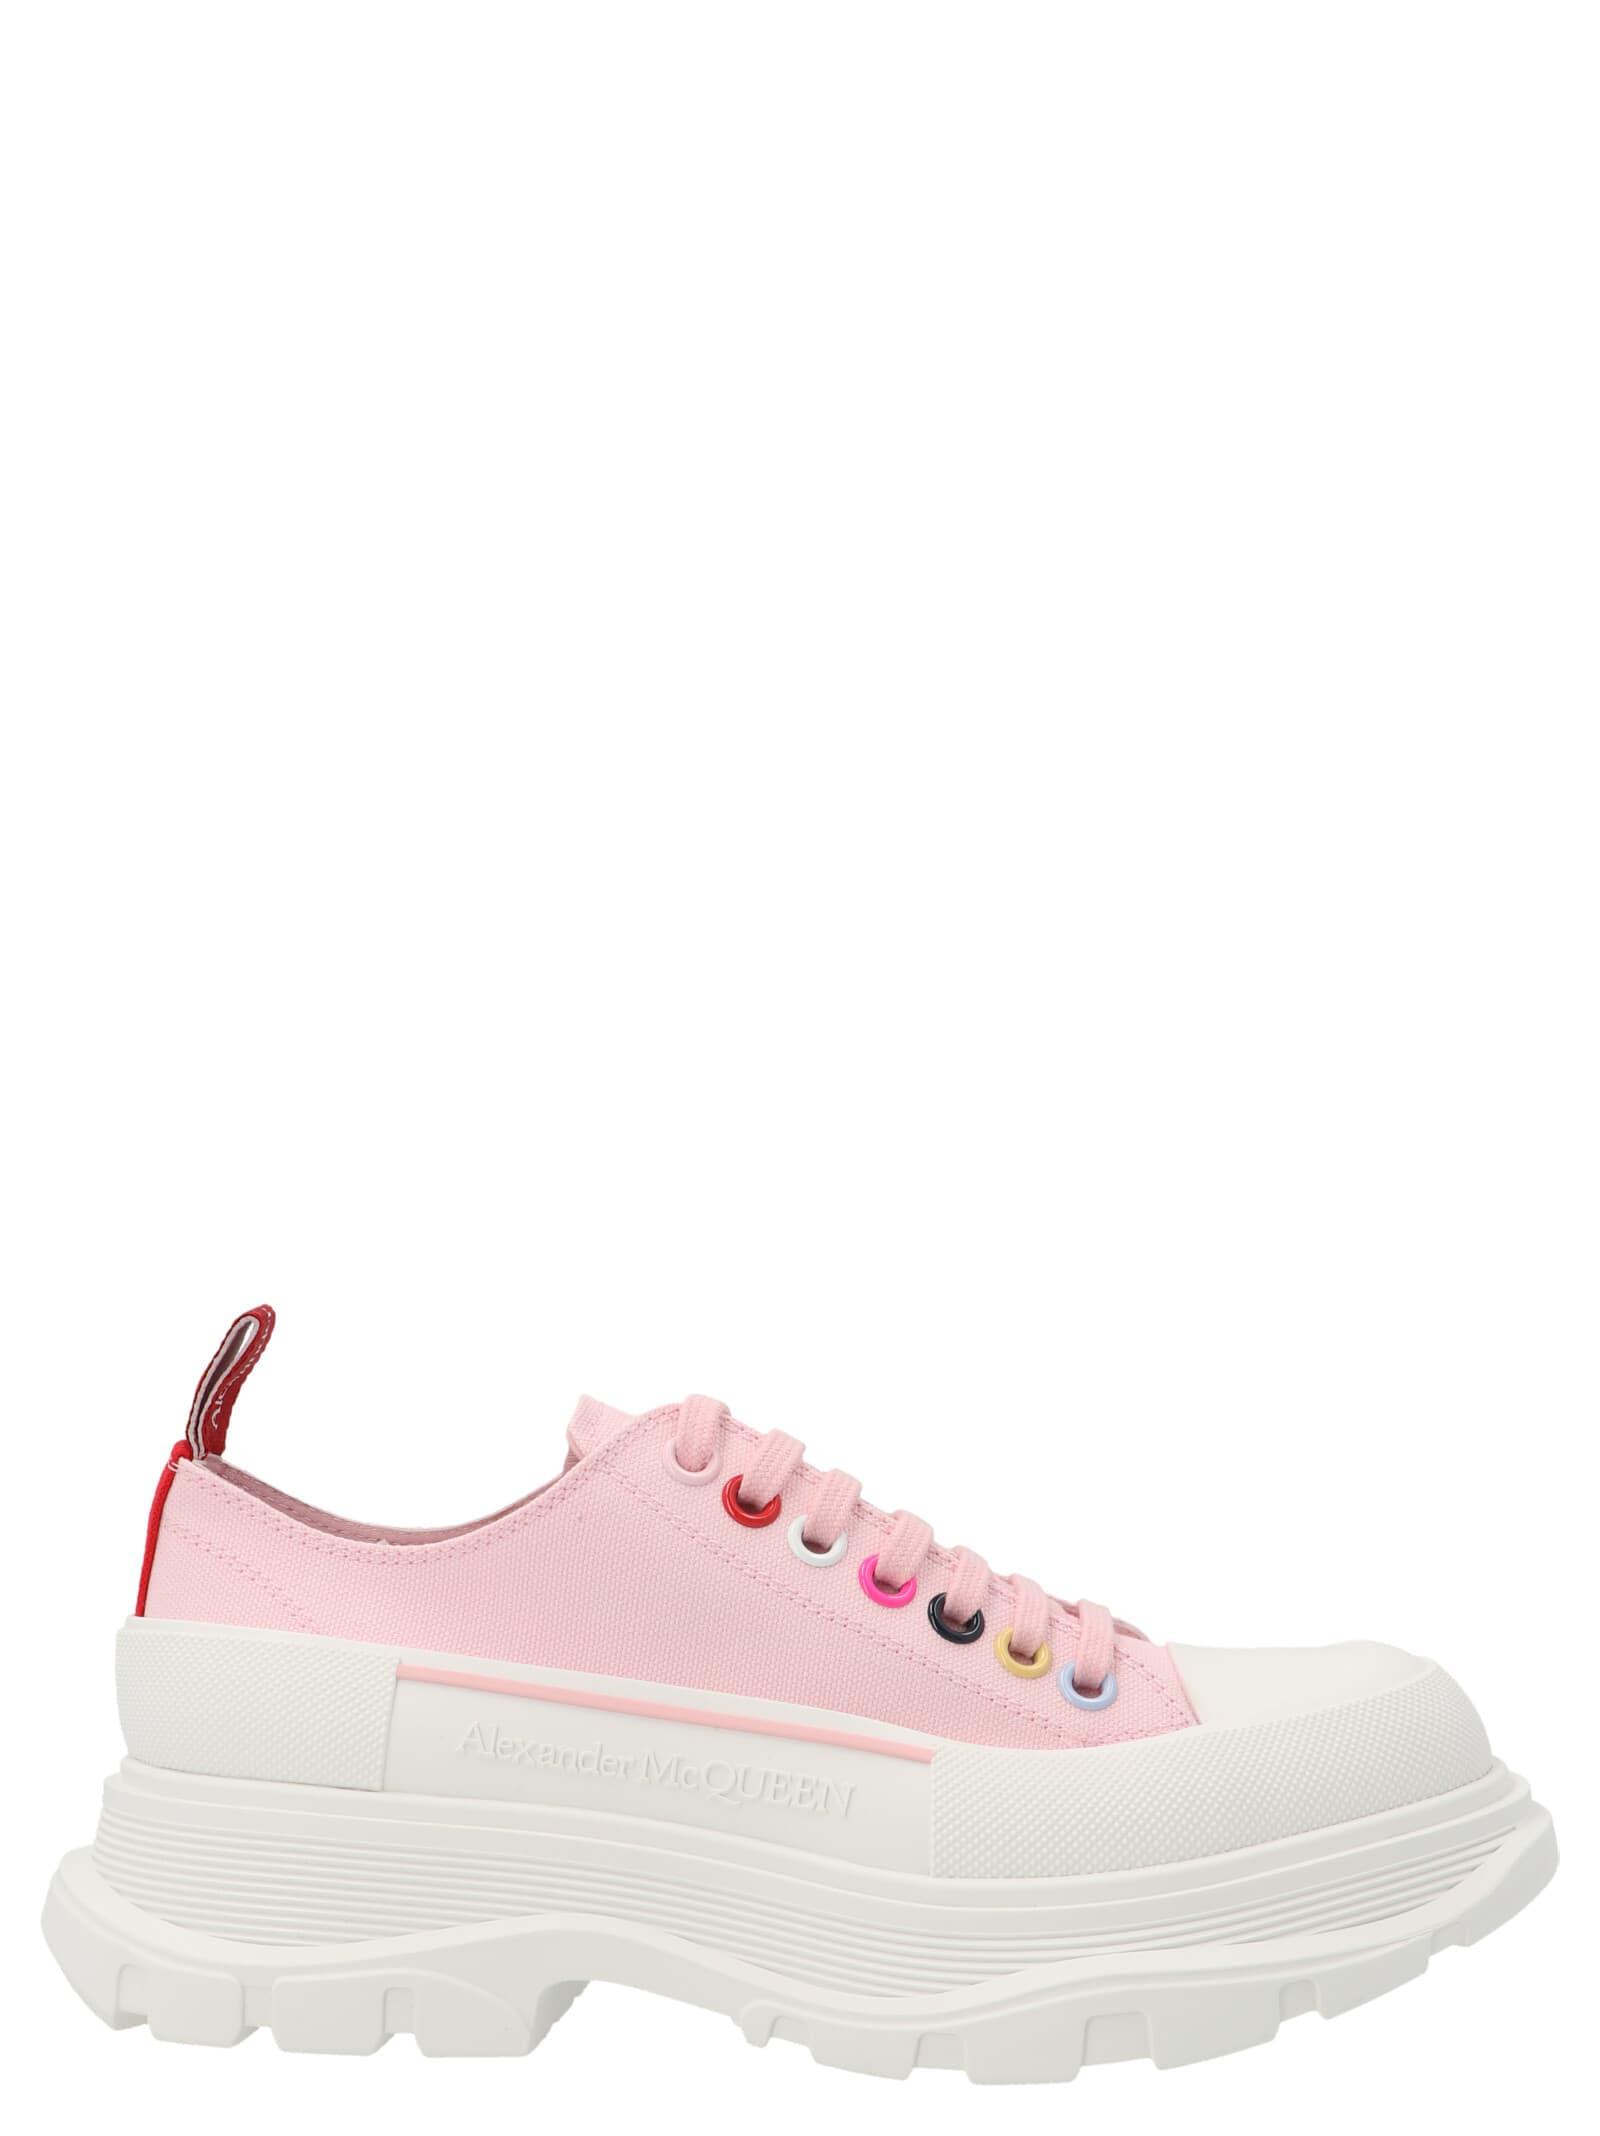 Alexander McQueen Leather Tread Slick Sneakers in Pink - Save 53 ...